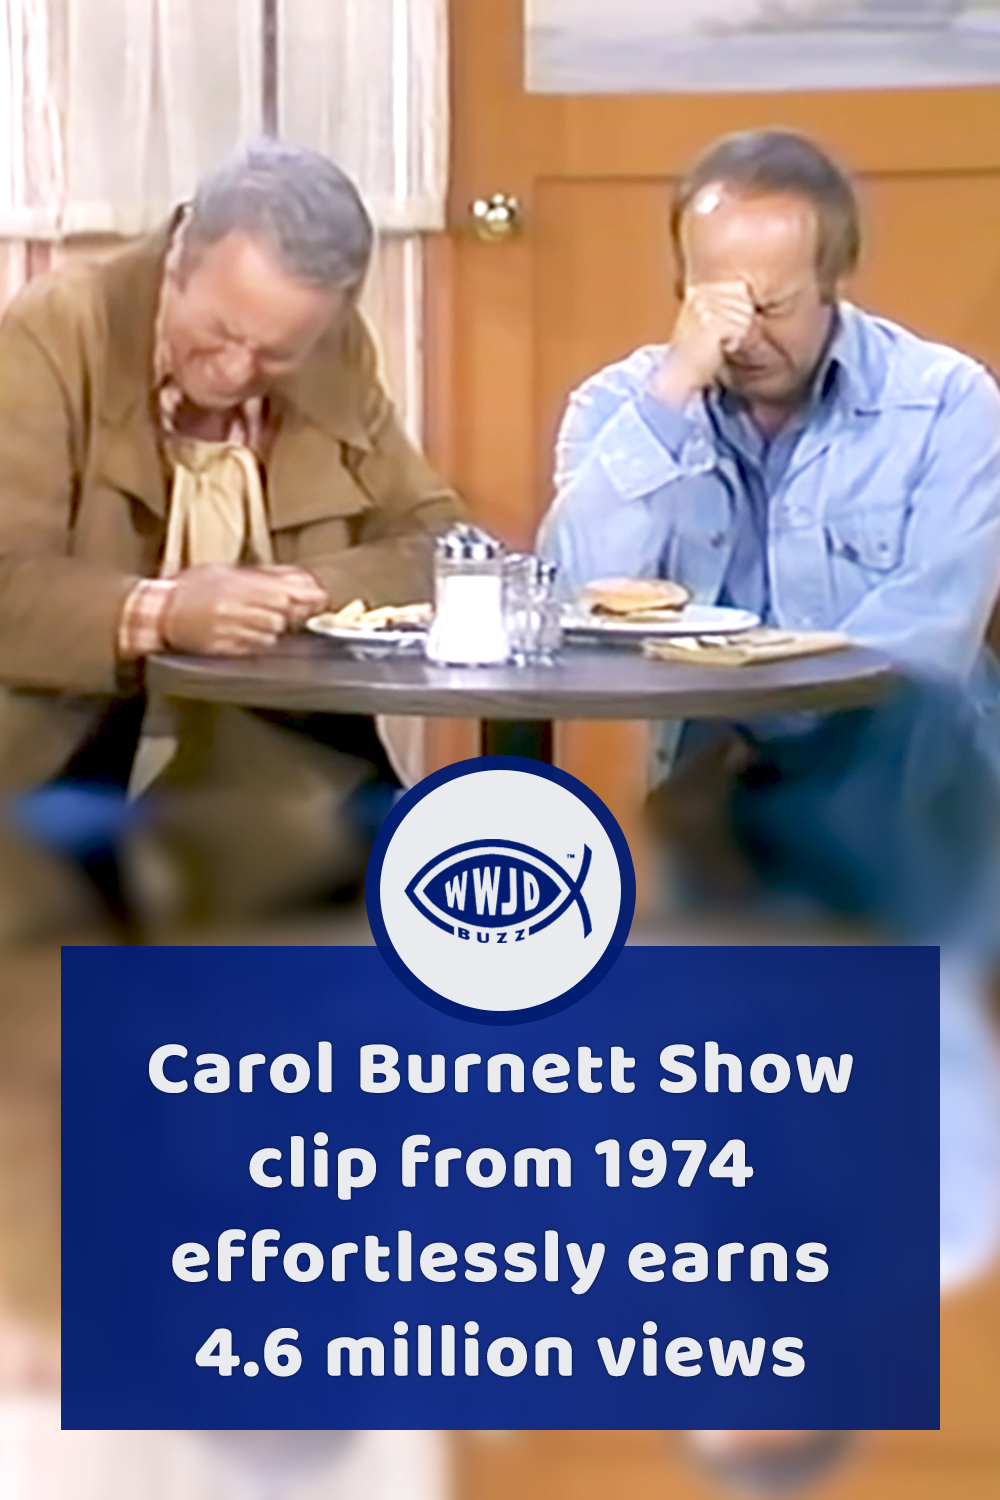 Carol Burnett Show clip from 1974 effortlessly earns 4.6 million views